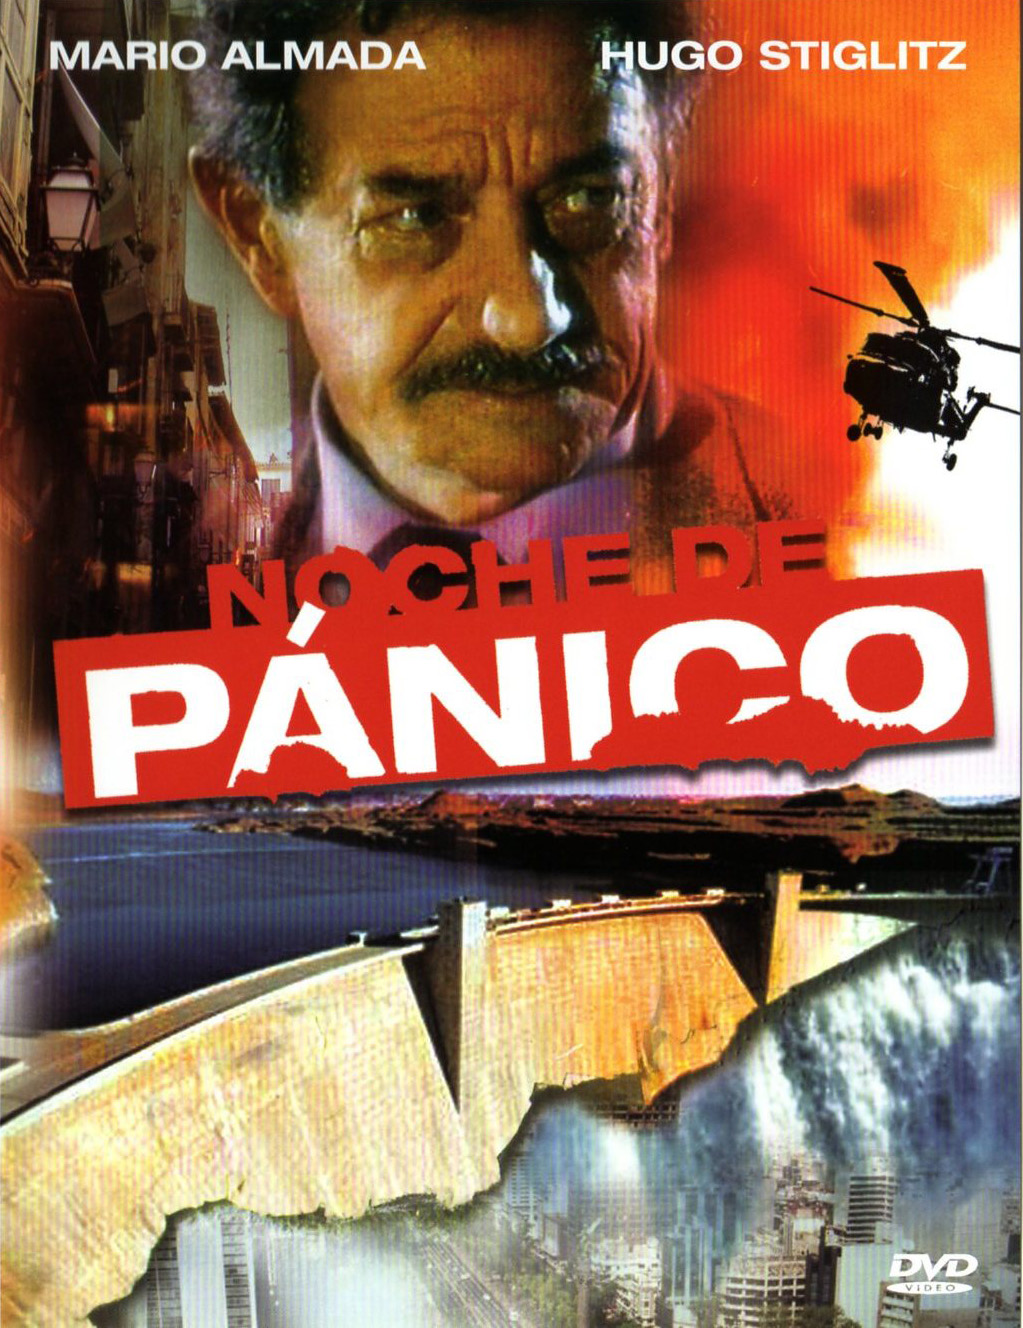 Noche de pánico (1990) Screenshot 1